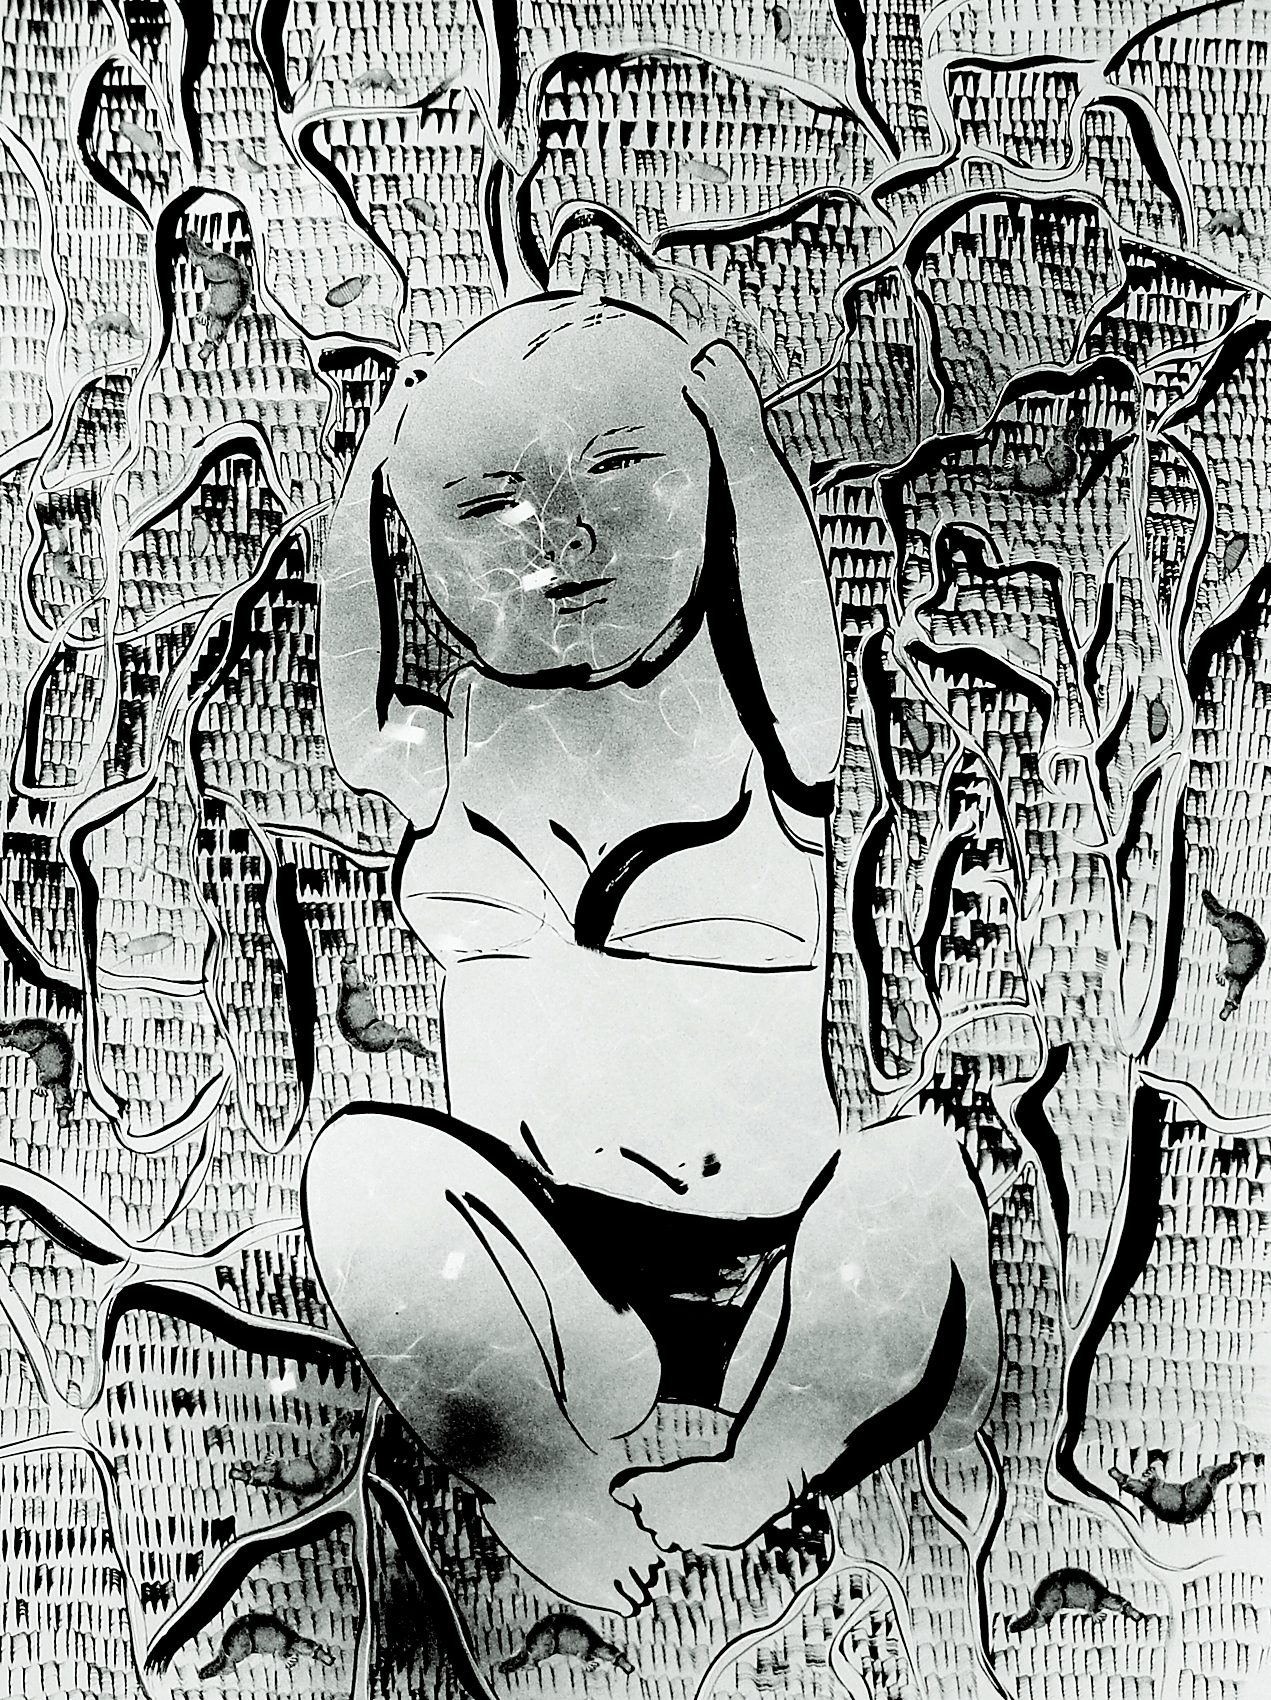 Bebek Kadınfeatured image